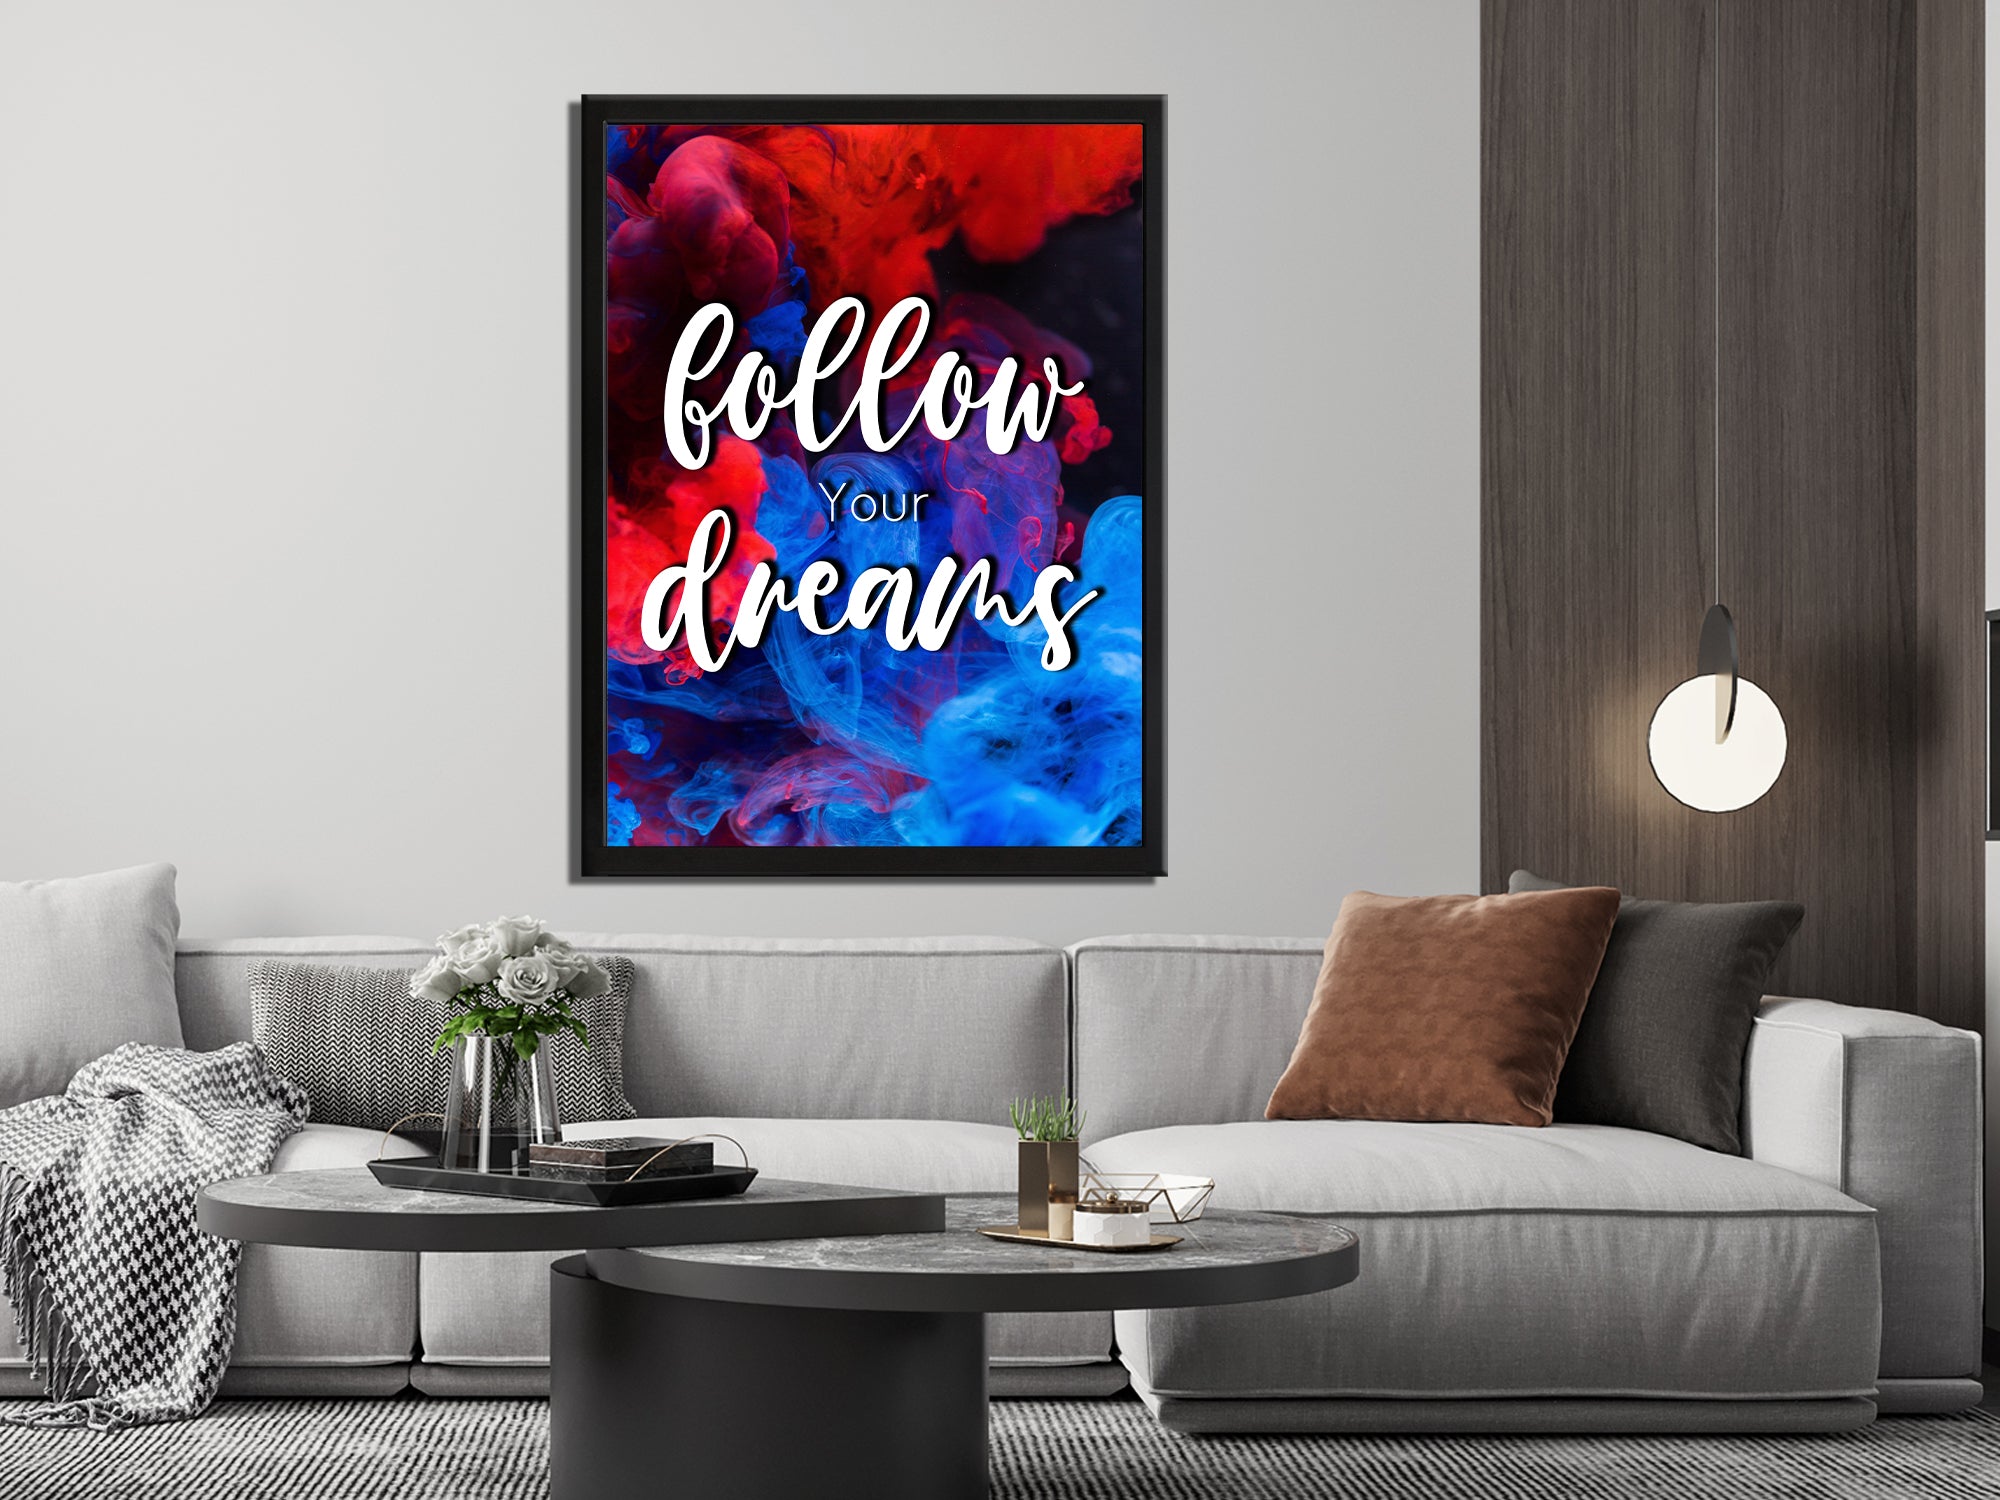 Follow Your Dreams - Inspiring - Canvas Wall Art